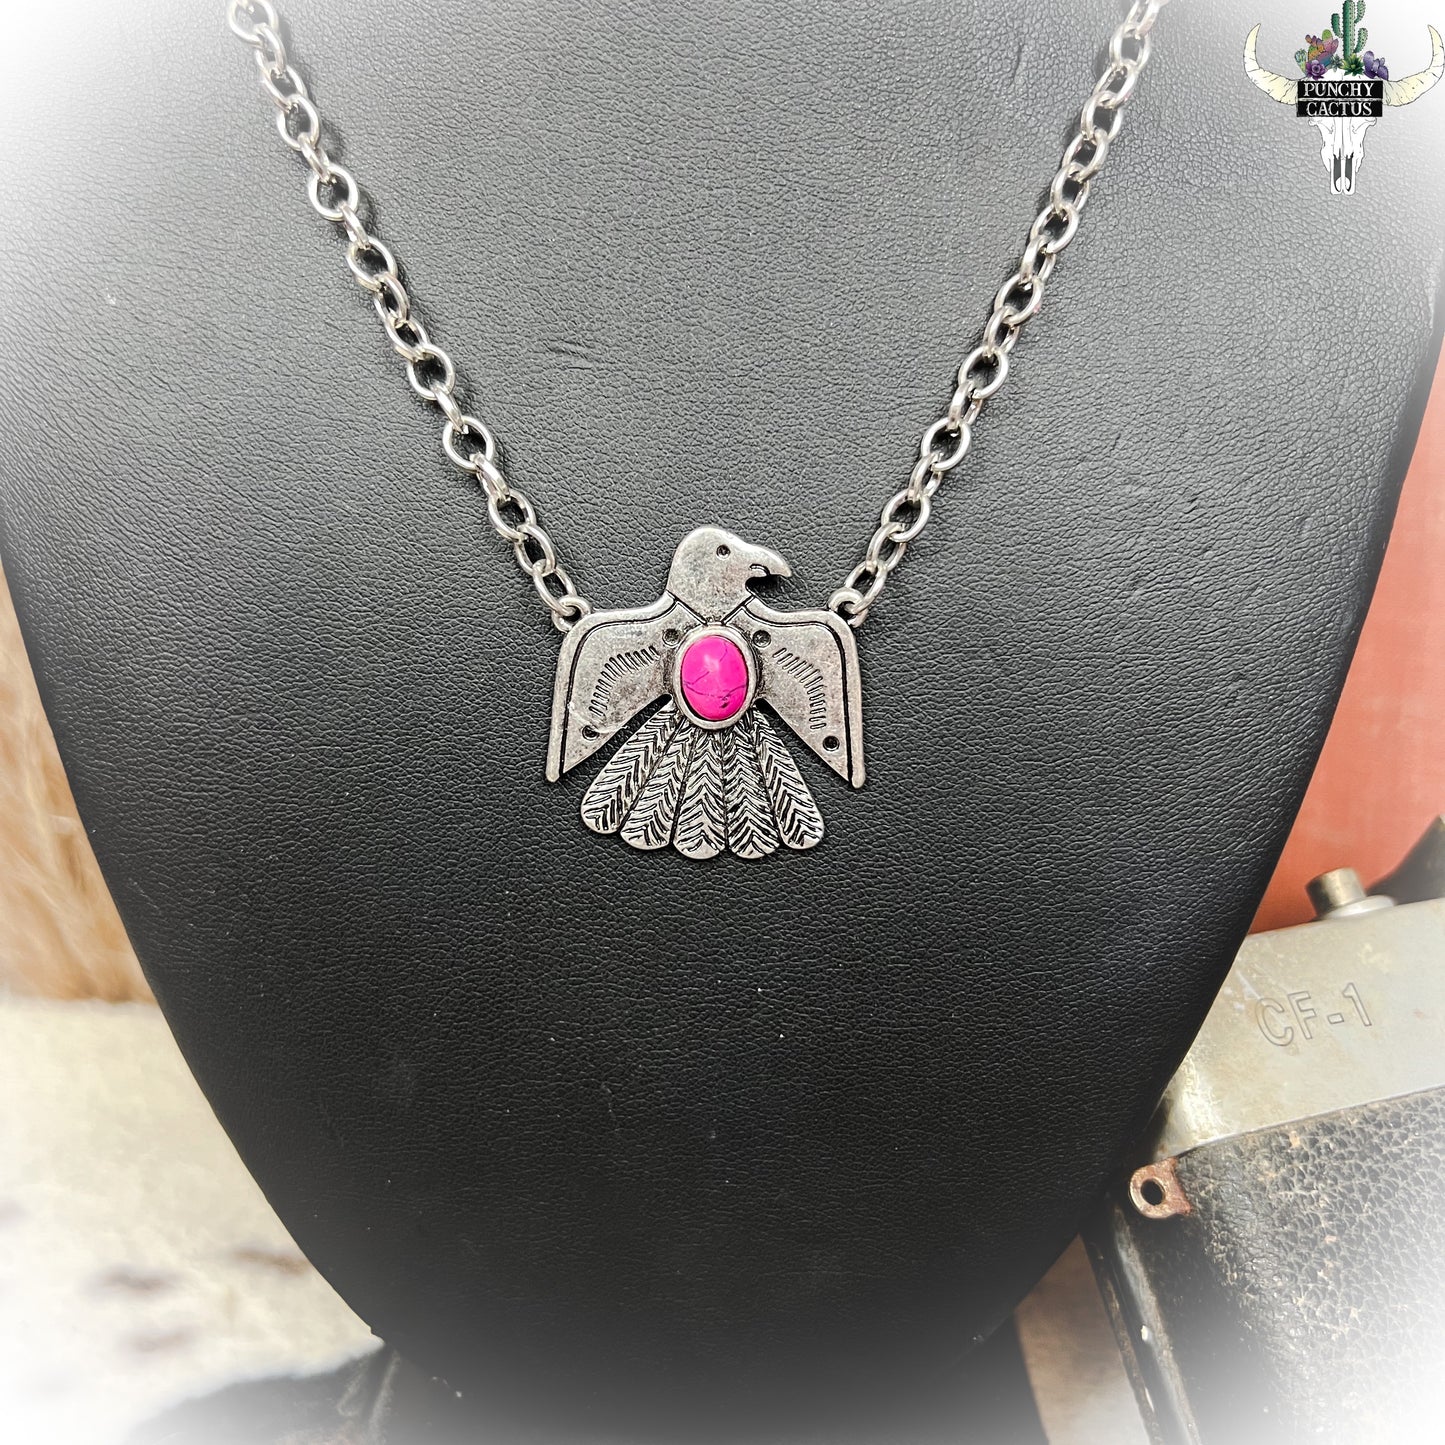 z-Western Thunderbird Necklace - Hot Pink